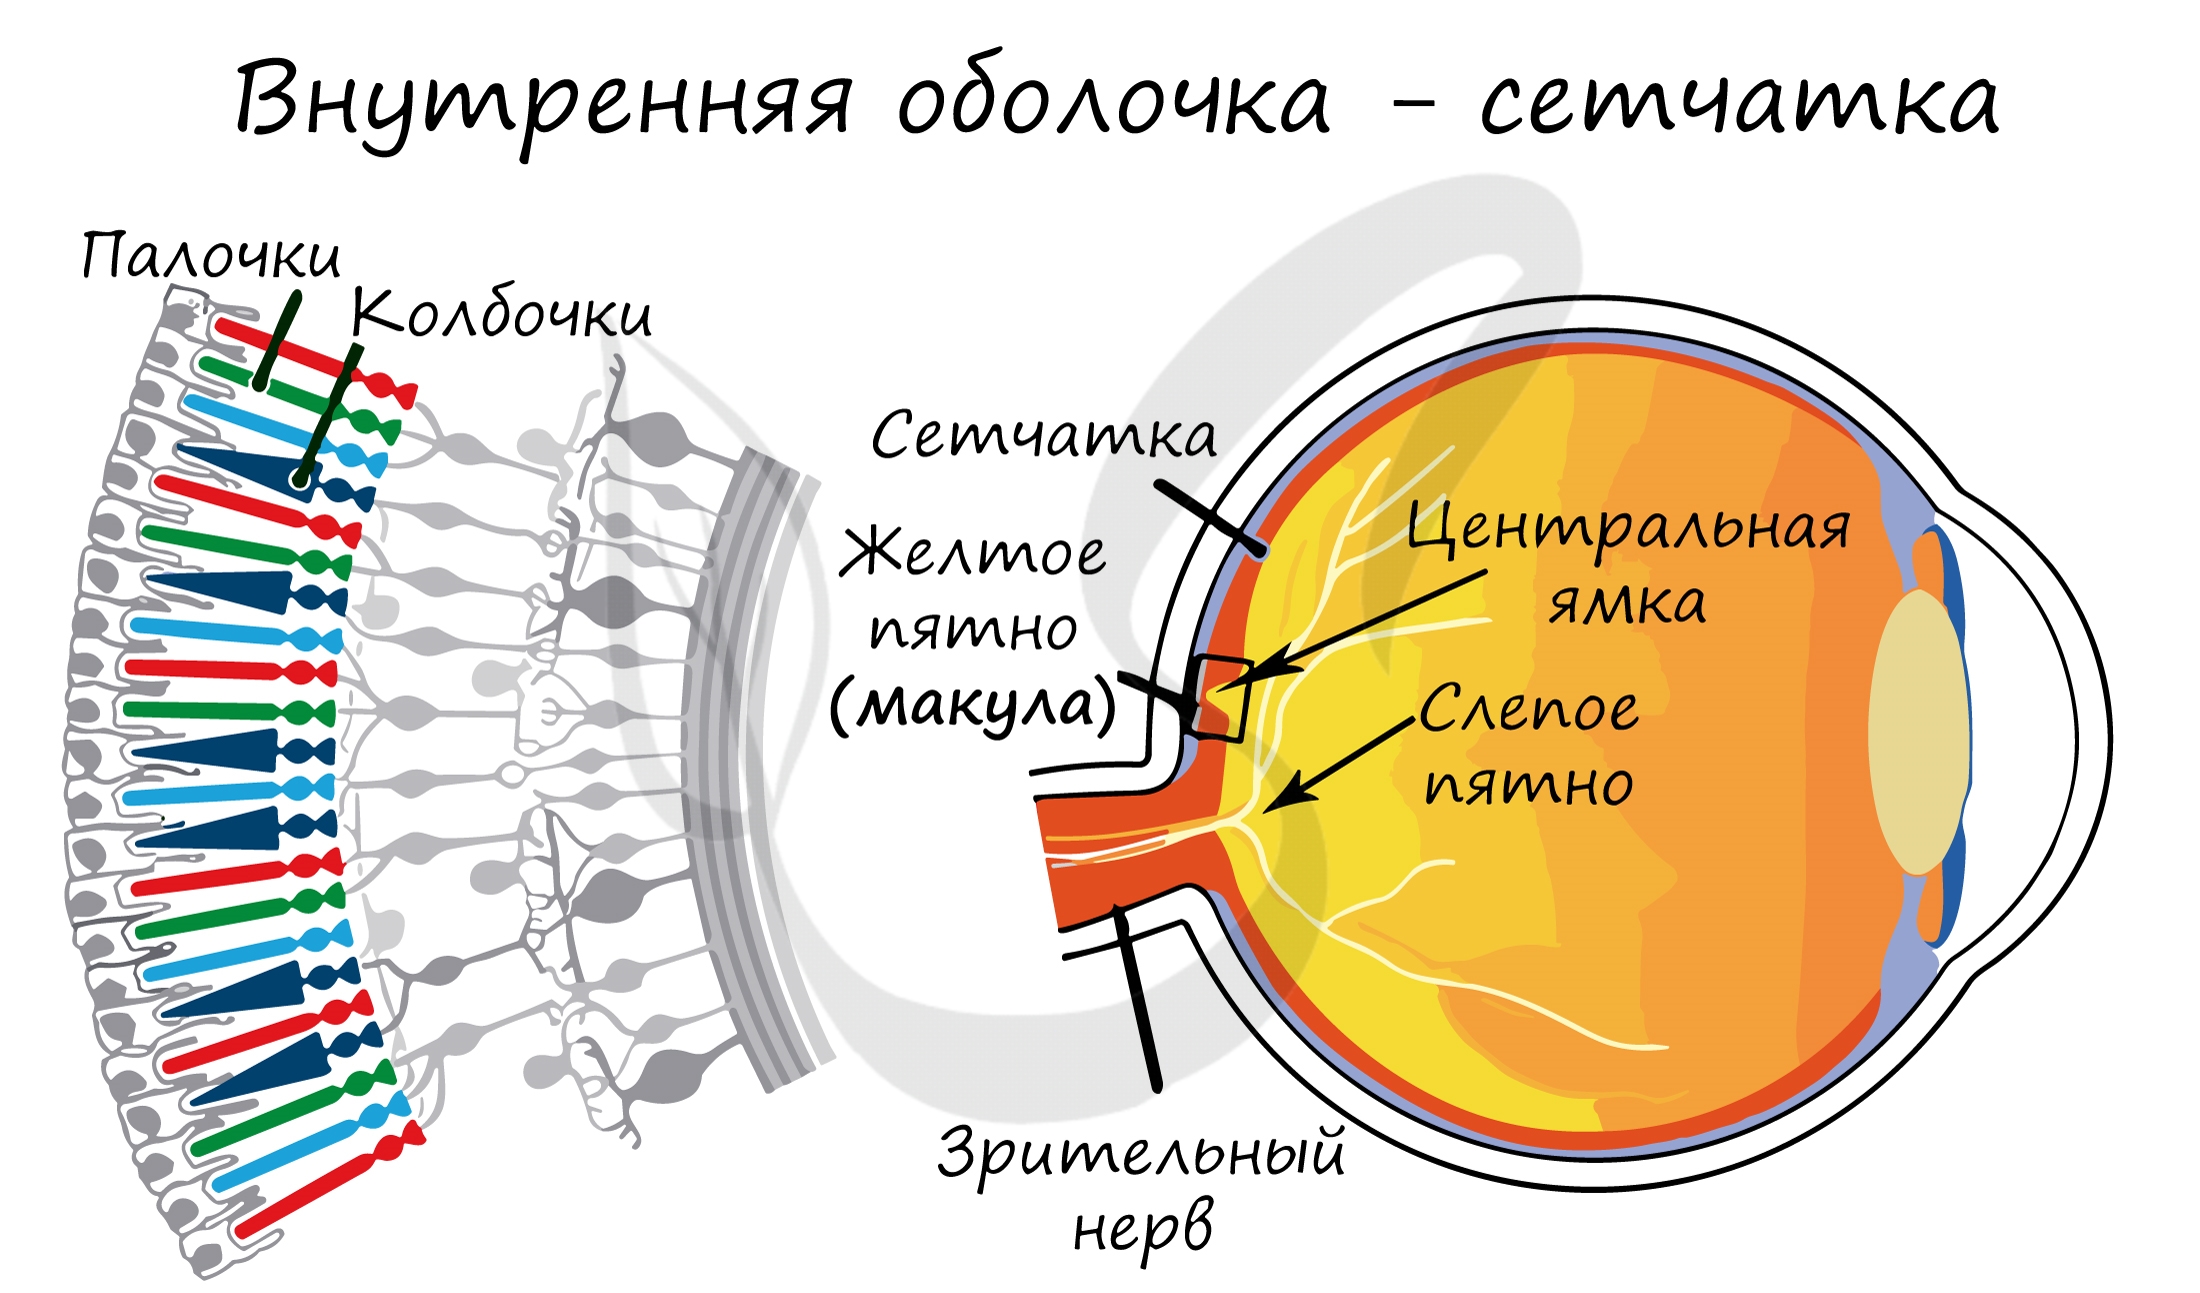 На сетчатку глаза за 3 с. Внутренняя оболочка сетчатка строение. Внутренняя оболочка глаза сетчатка. Строение глаза сетчатка глаза. Строение сетчатки оболочки глаза.